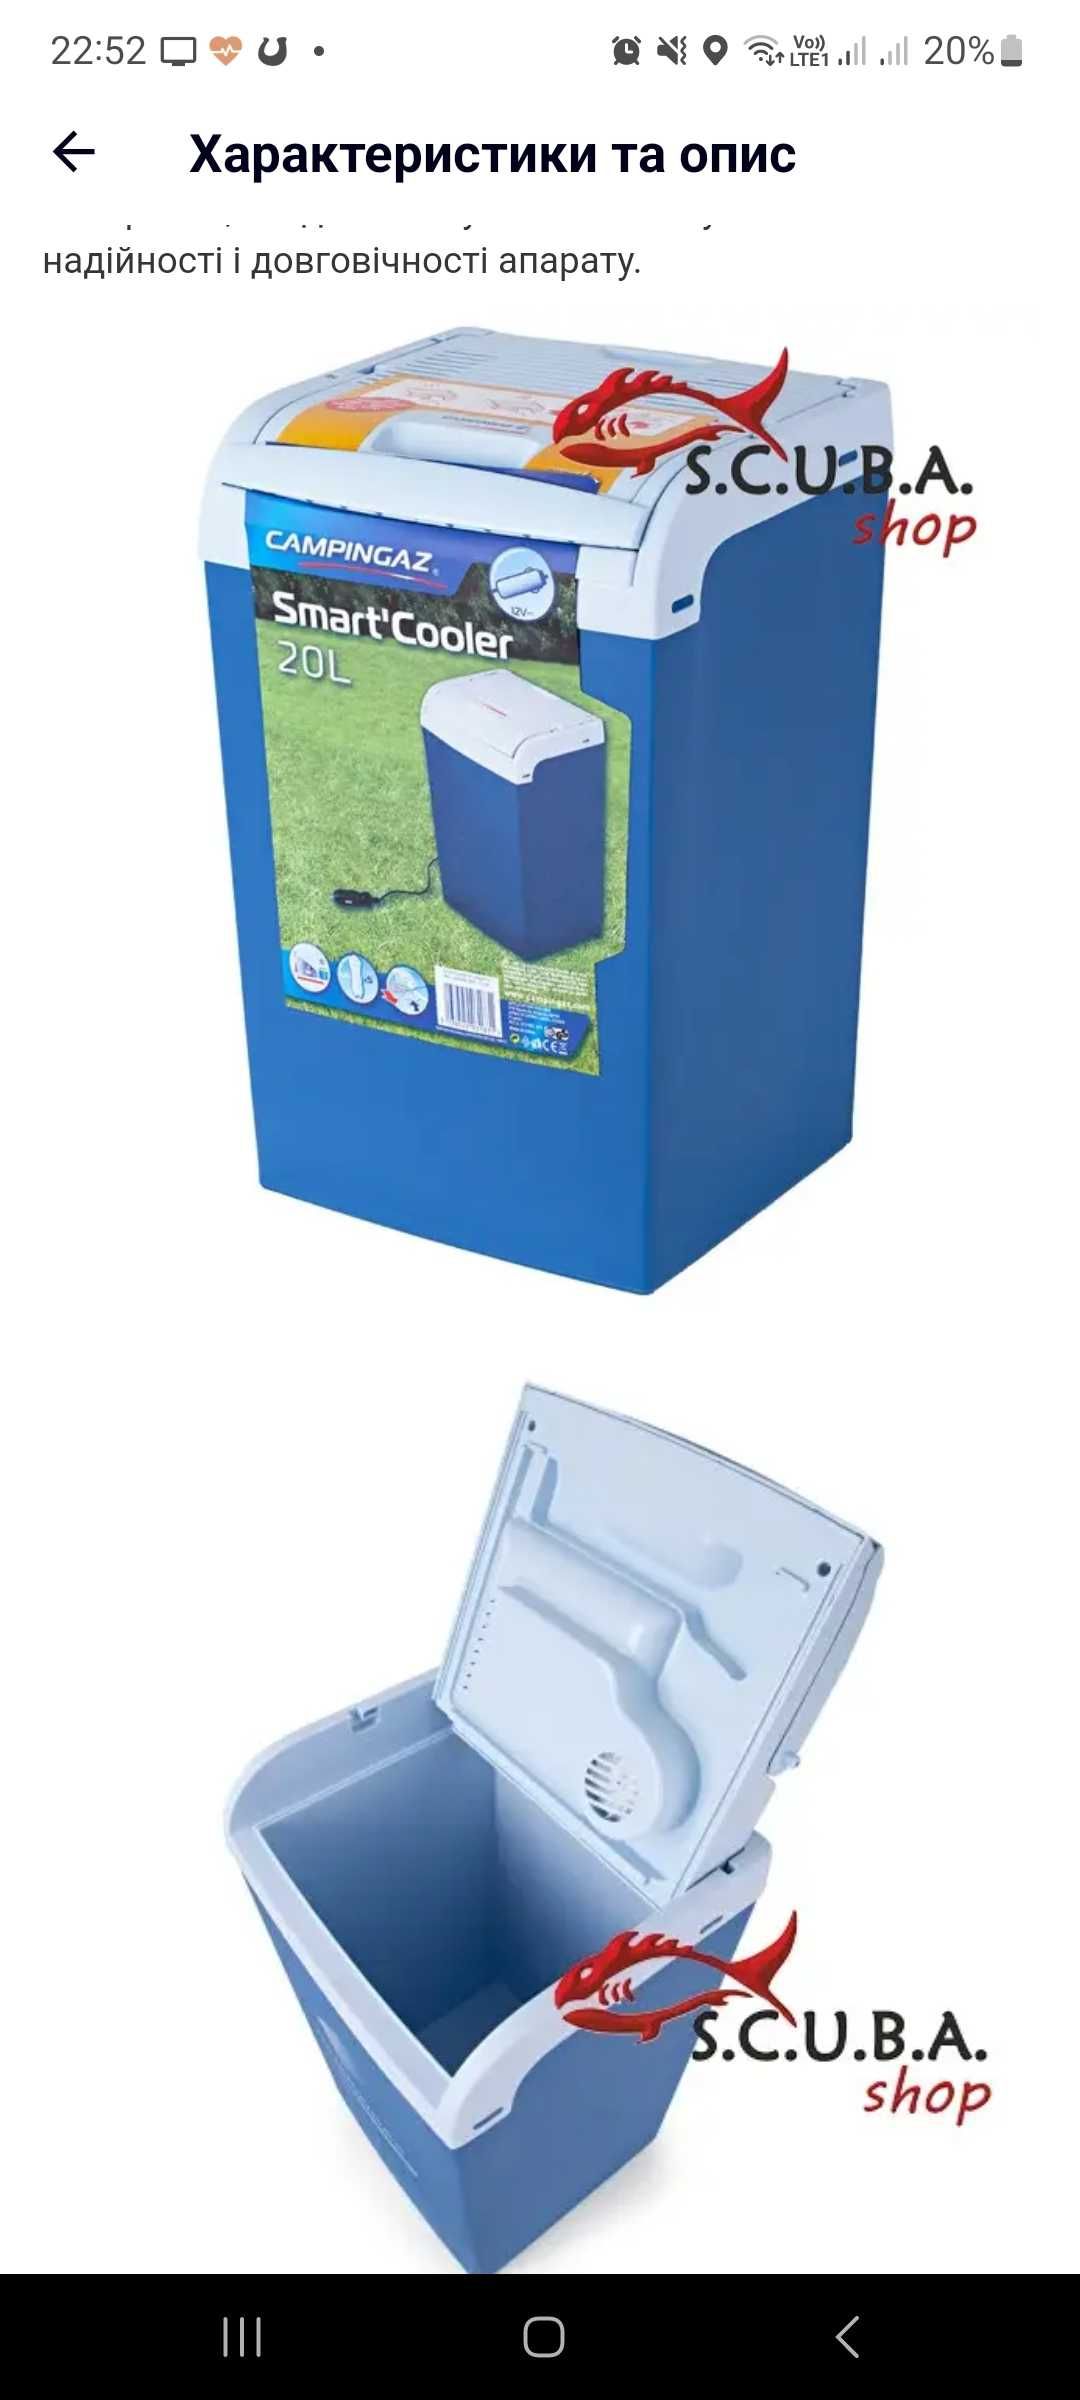 автохолодильники CAMPINGAZ SMART Cooler Electric TE 20